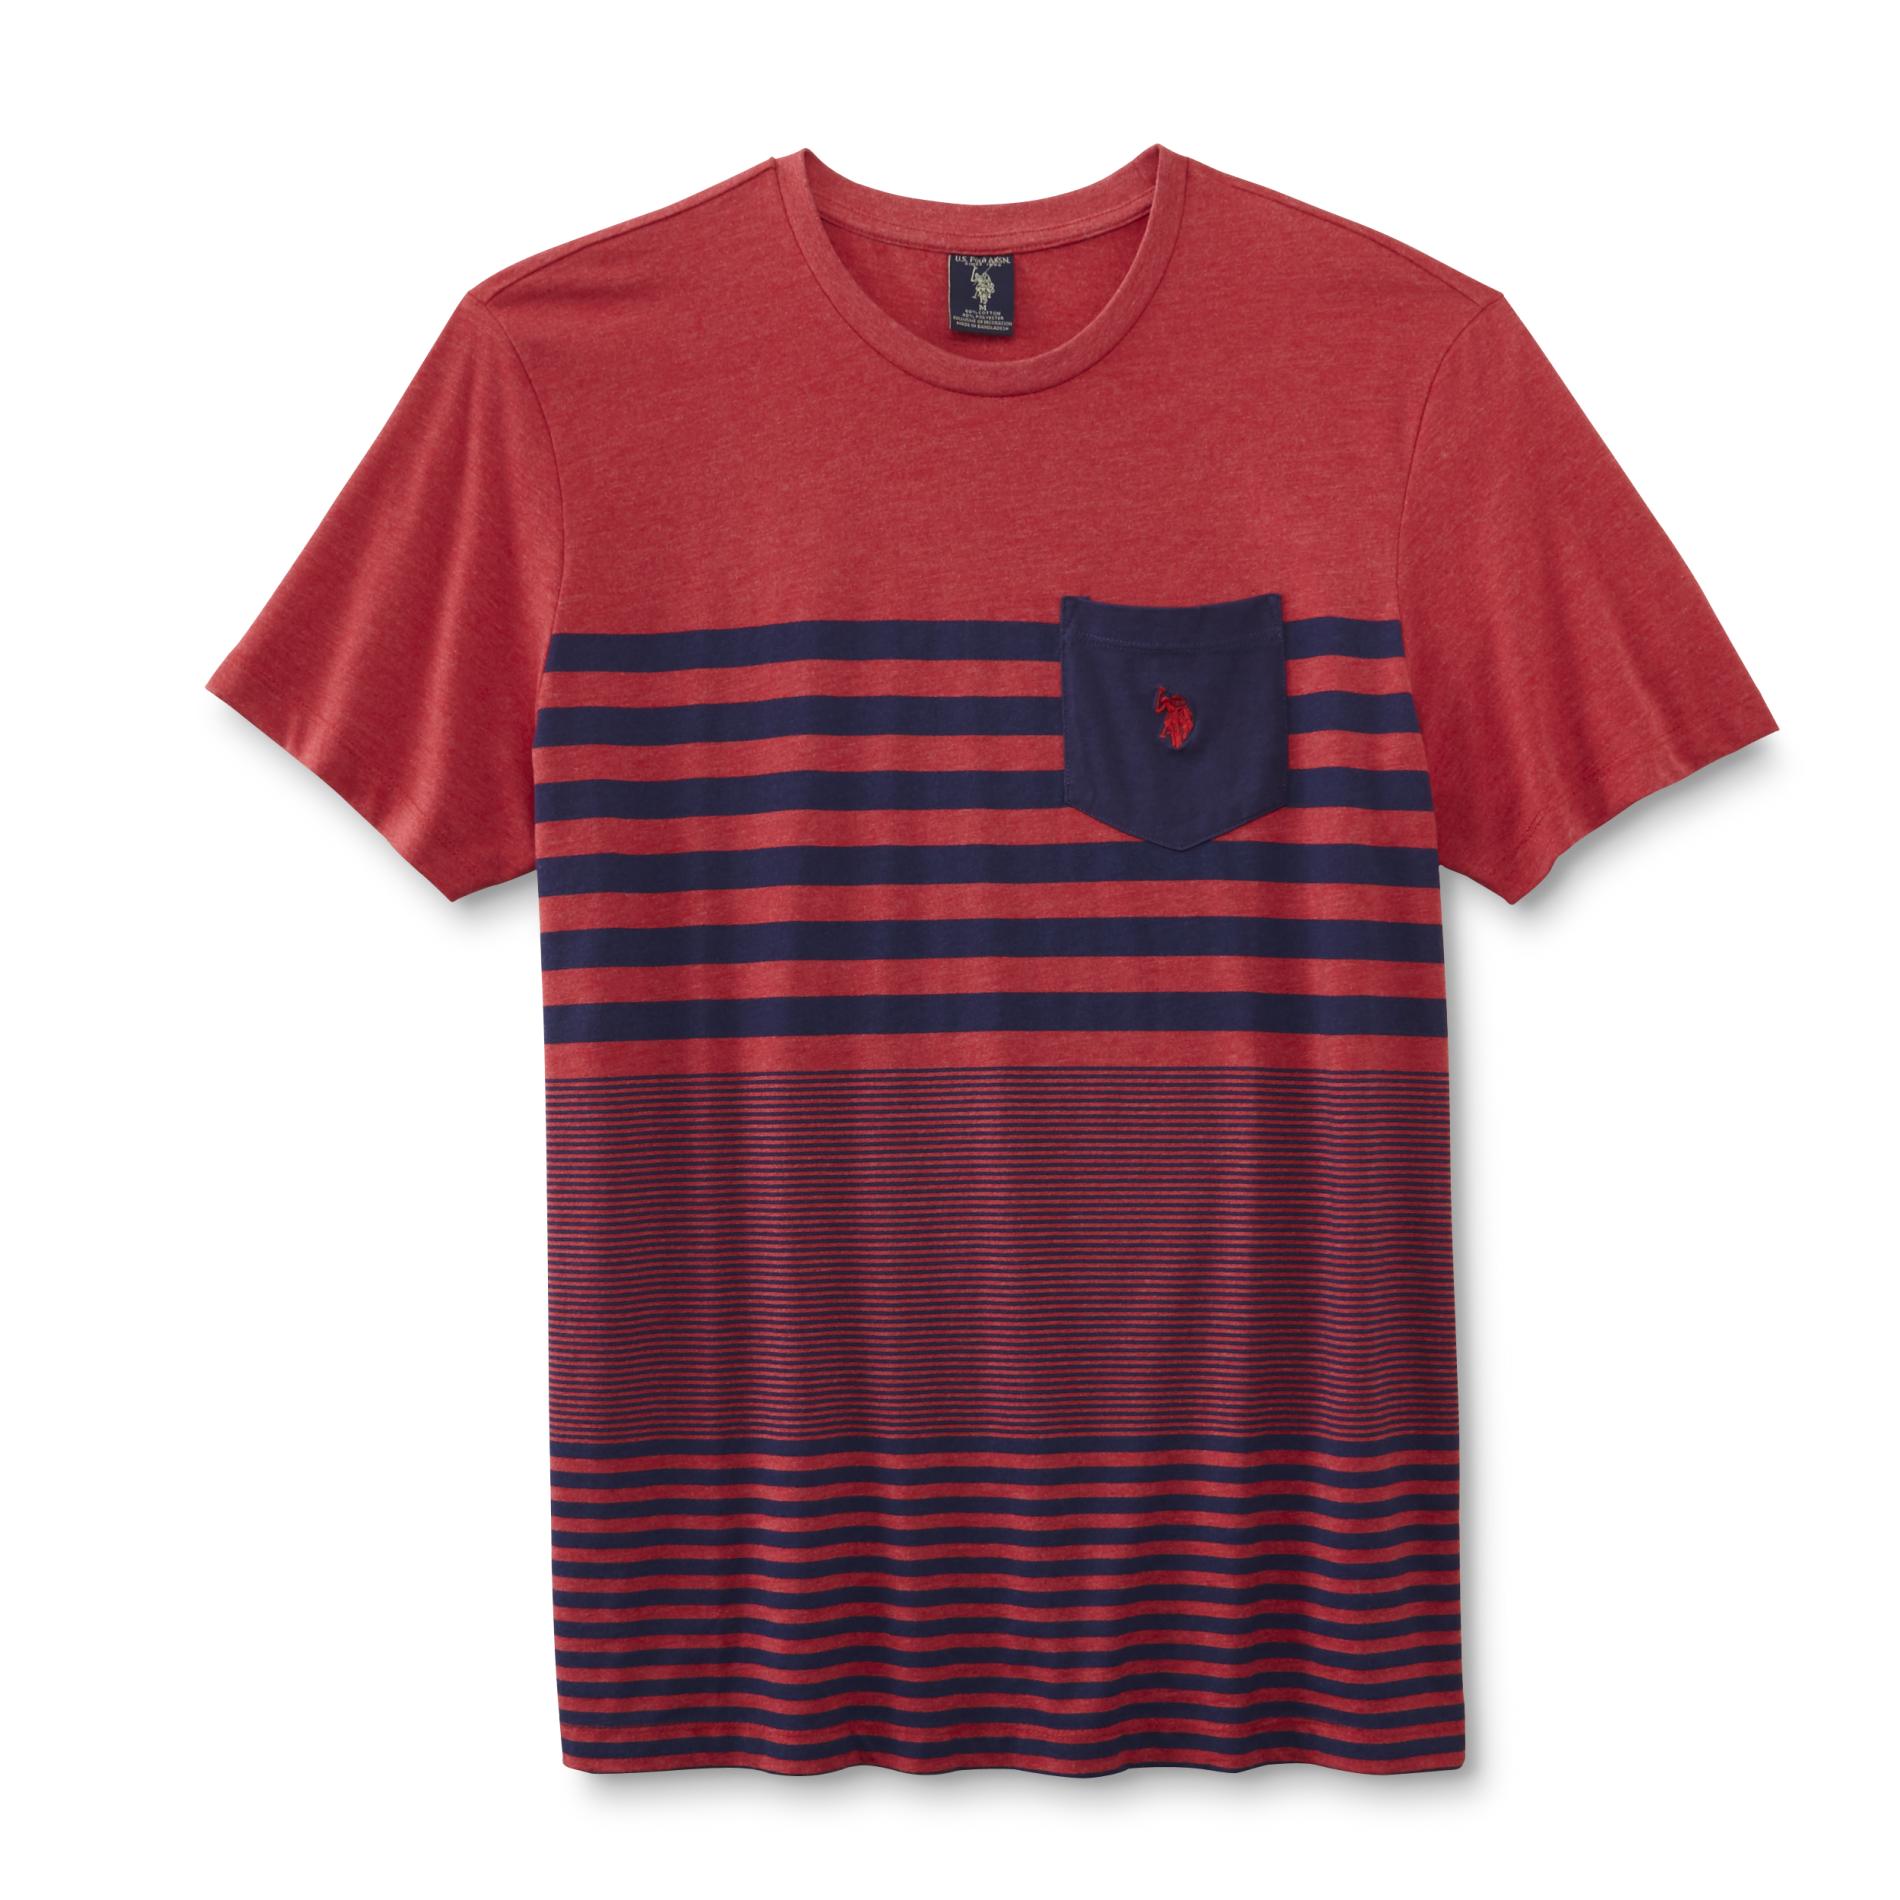 U.S. Polo Assn. Men's Pocket T-Shirt - Striped